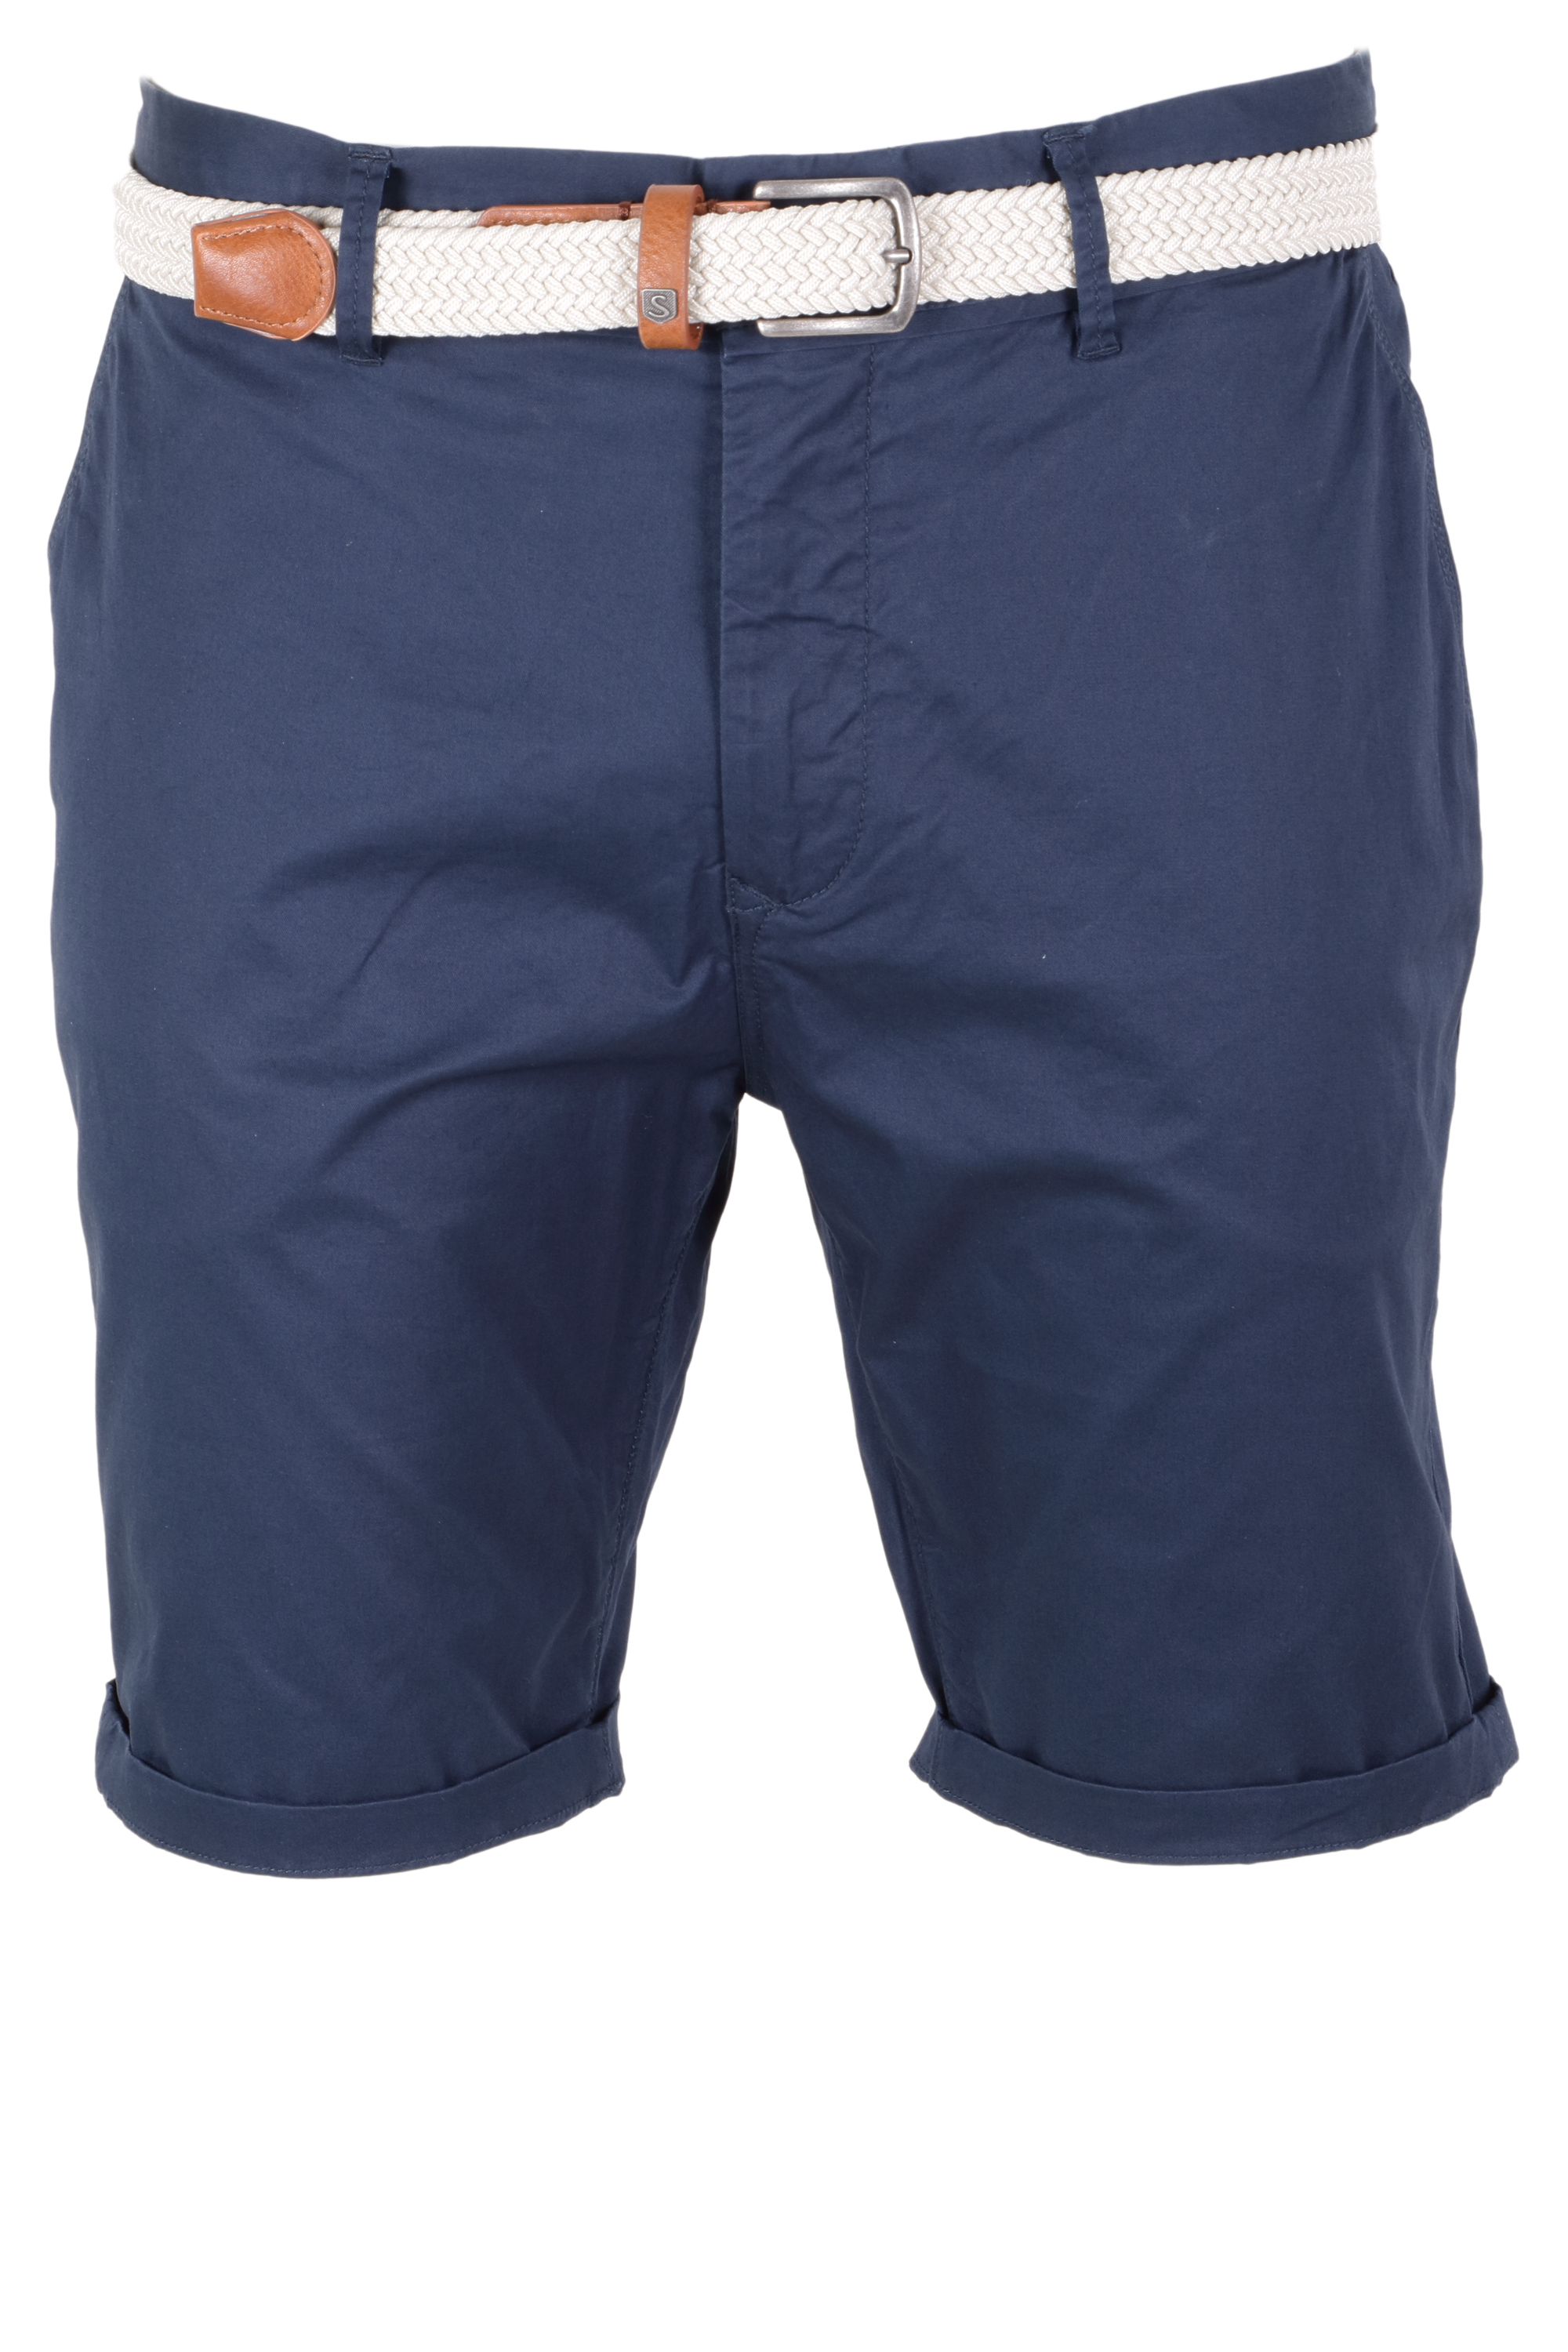 Sala Herren Bermuda Shorts mit Gürtel - dunkelblau 31